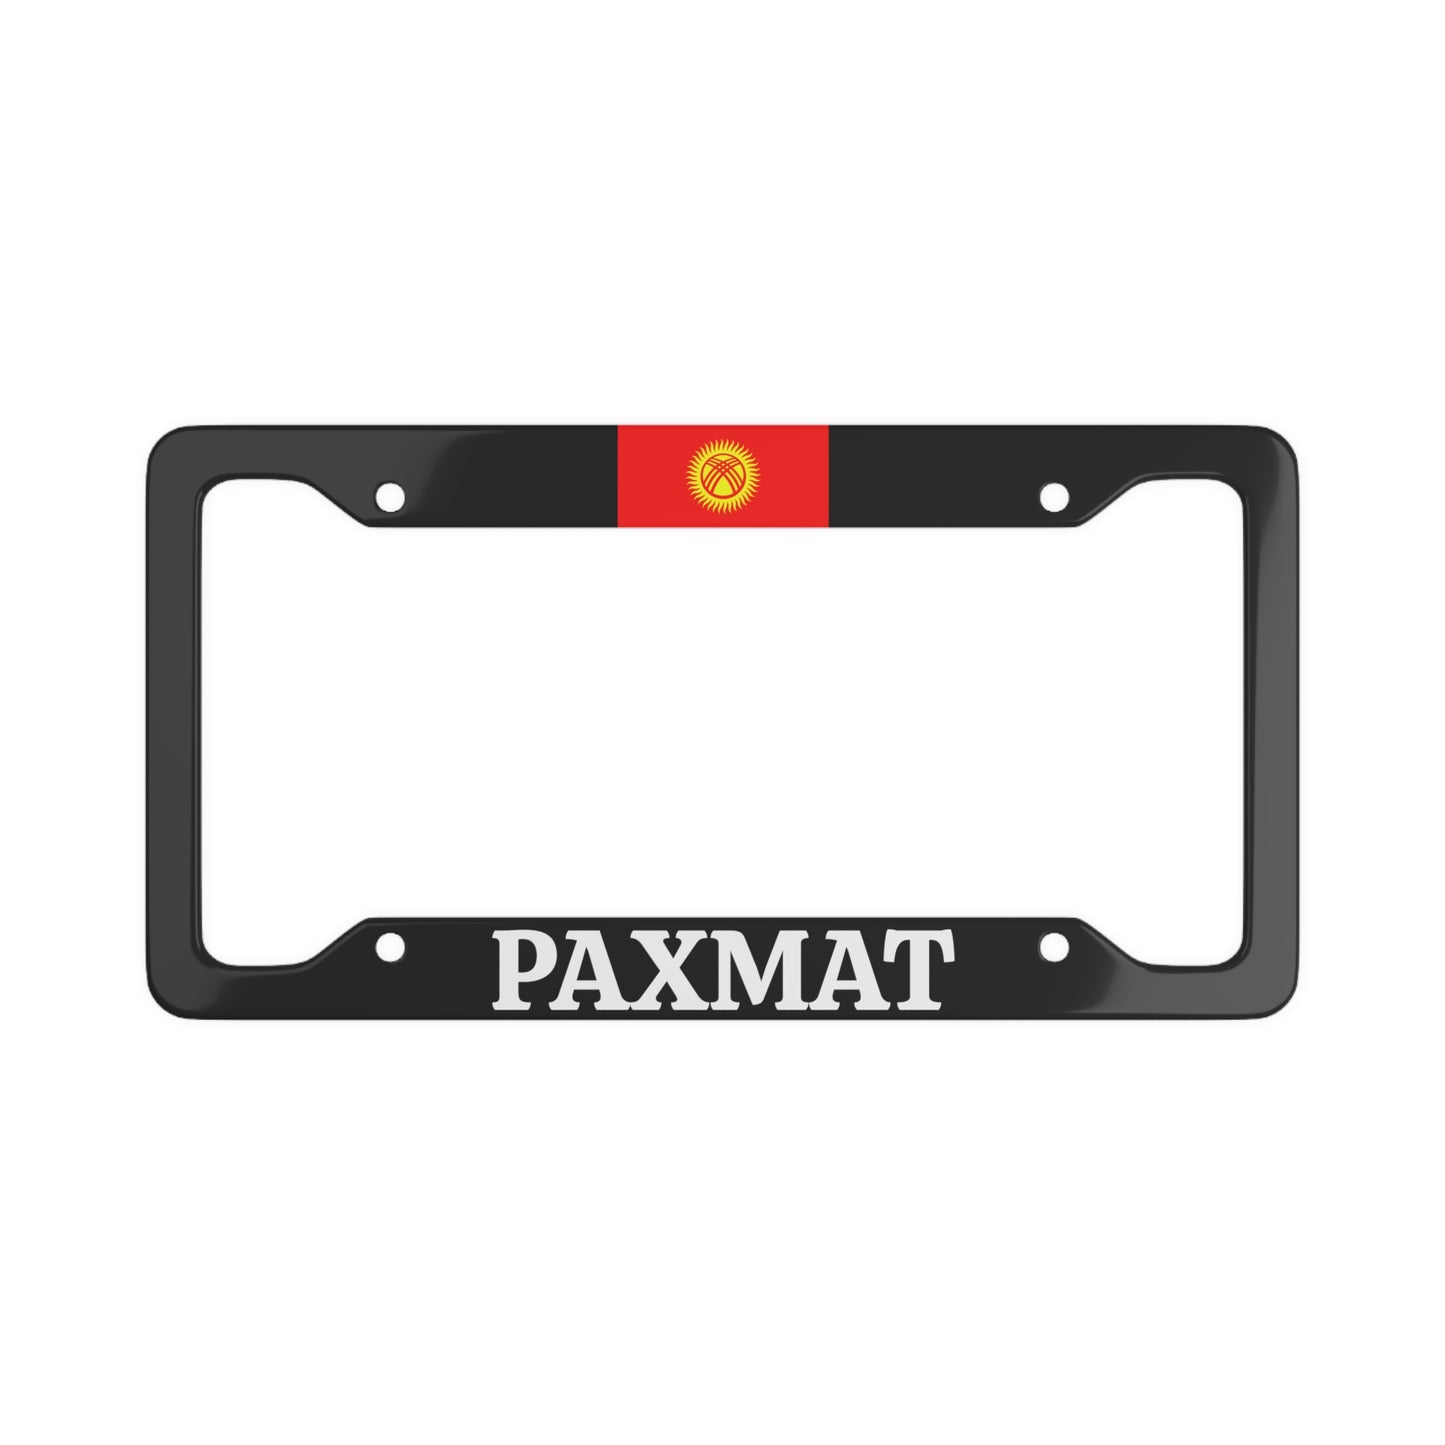 RAHMAT with flag License Plate Frame